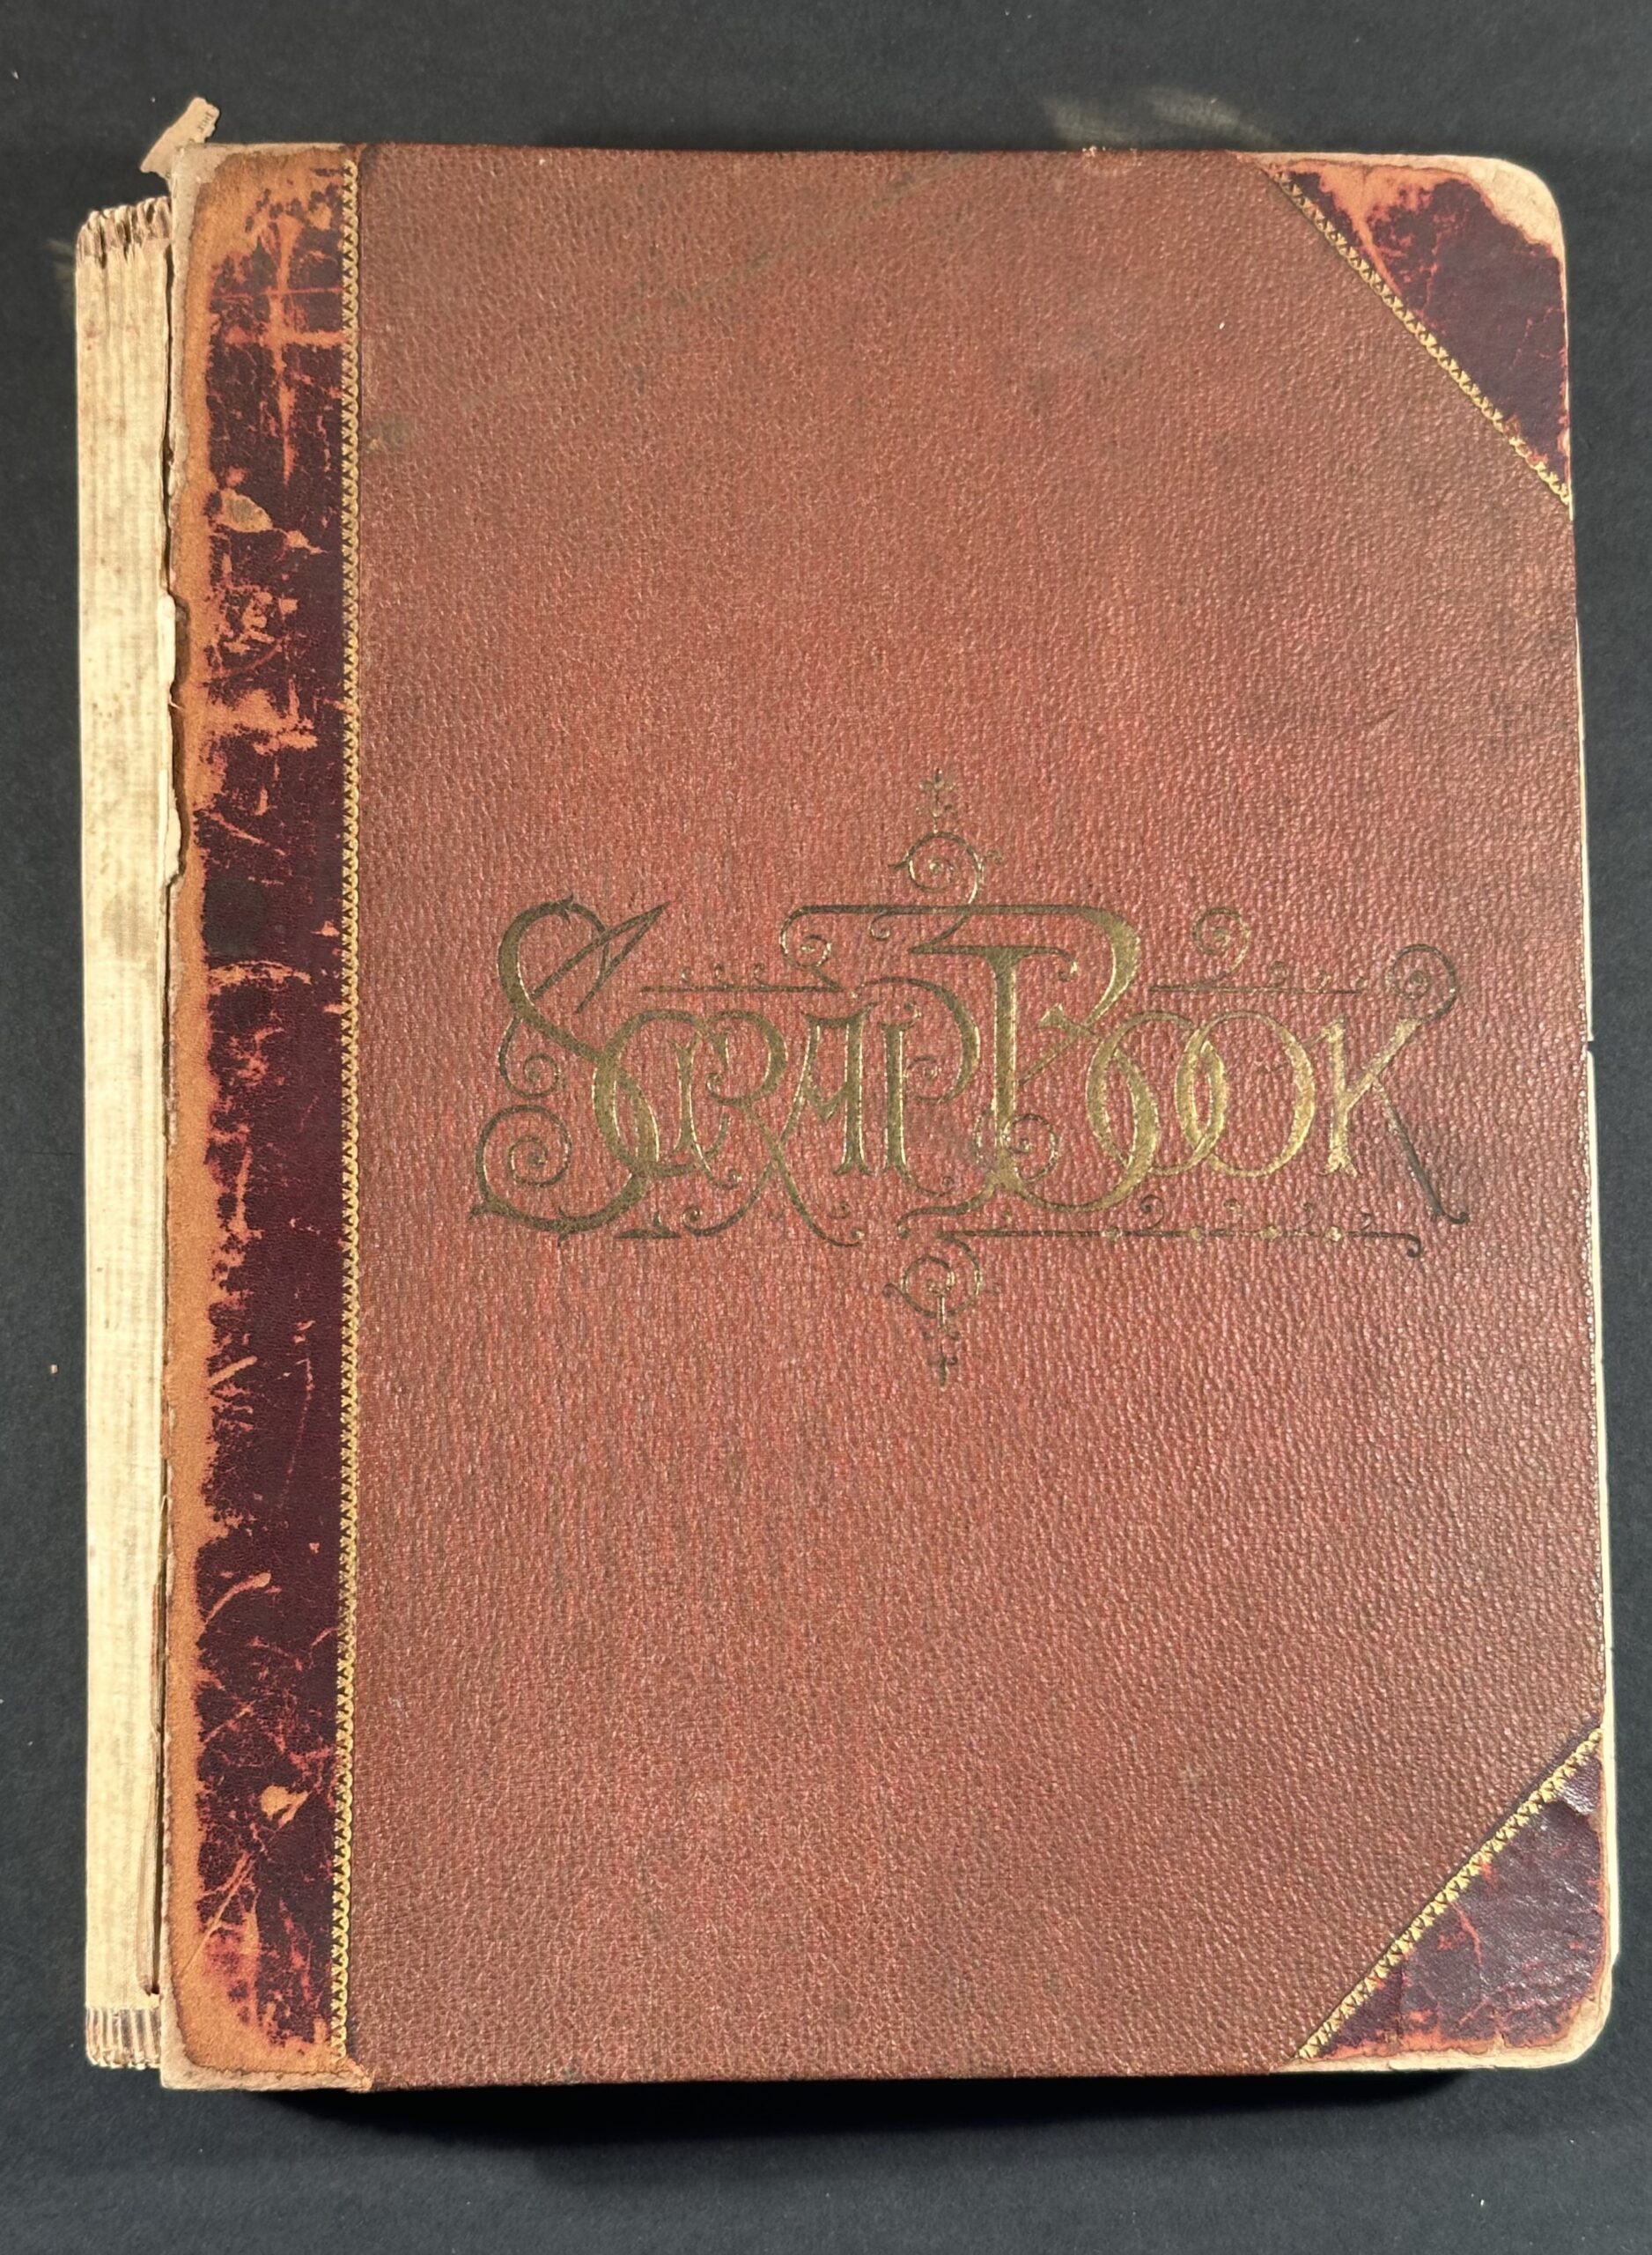 Nelson, David Fox. “Volume 5,” [1874-1879], from the David Fox Nelson Scrapbooks collection